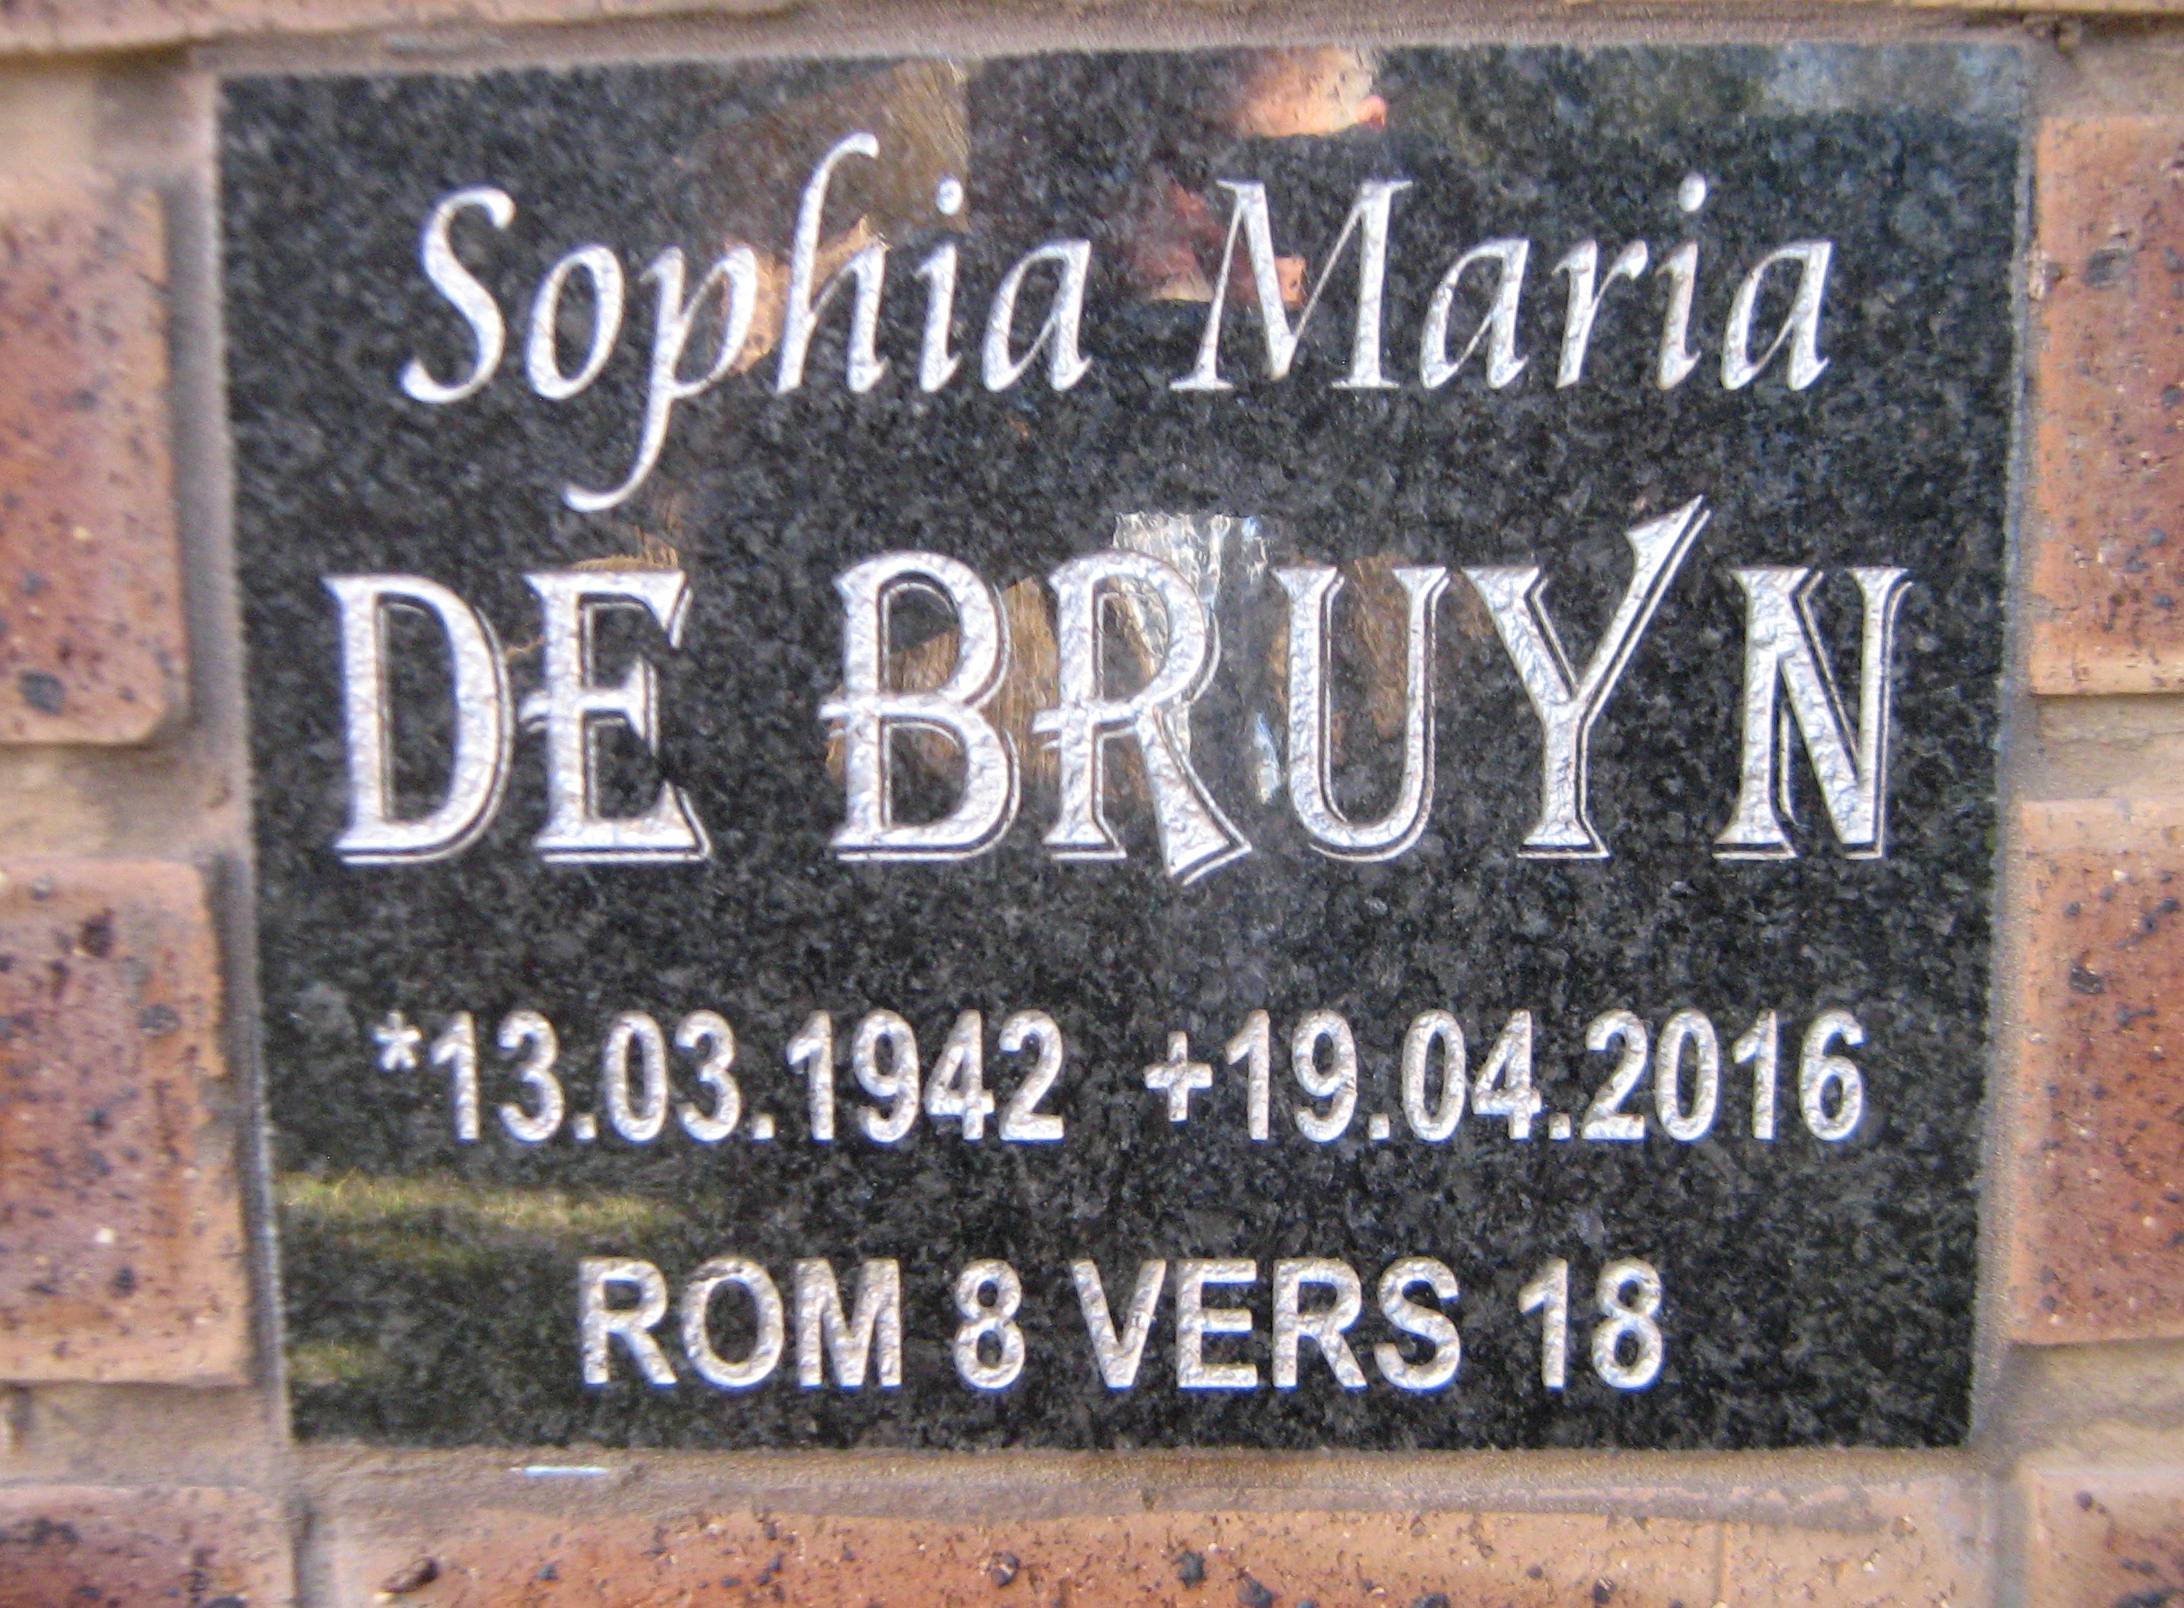 BRUYN Sophia Maria, de 1942-2016